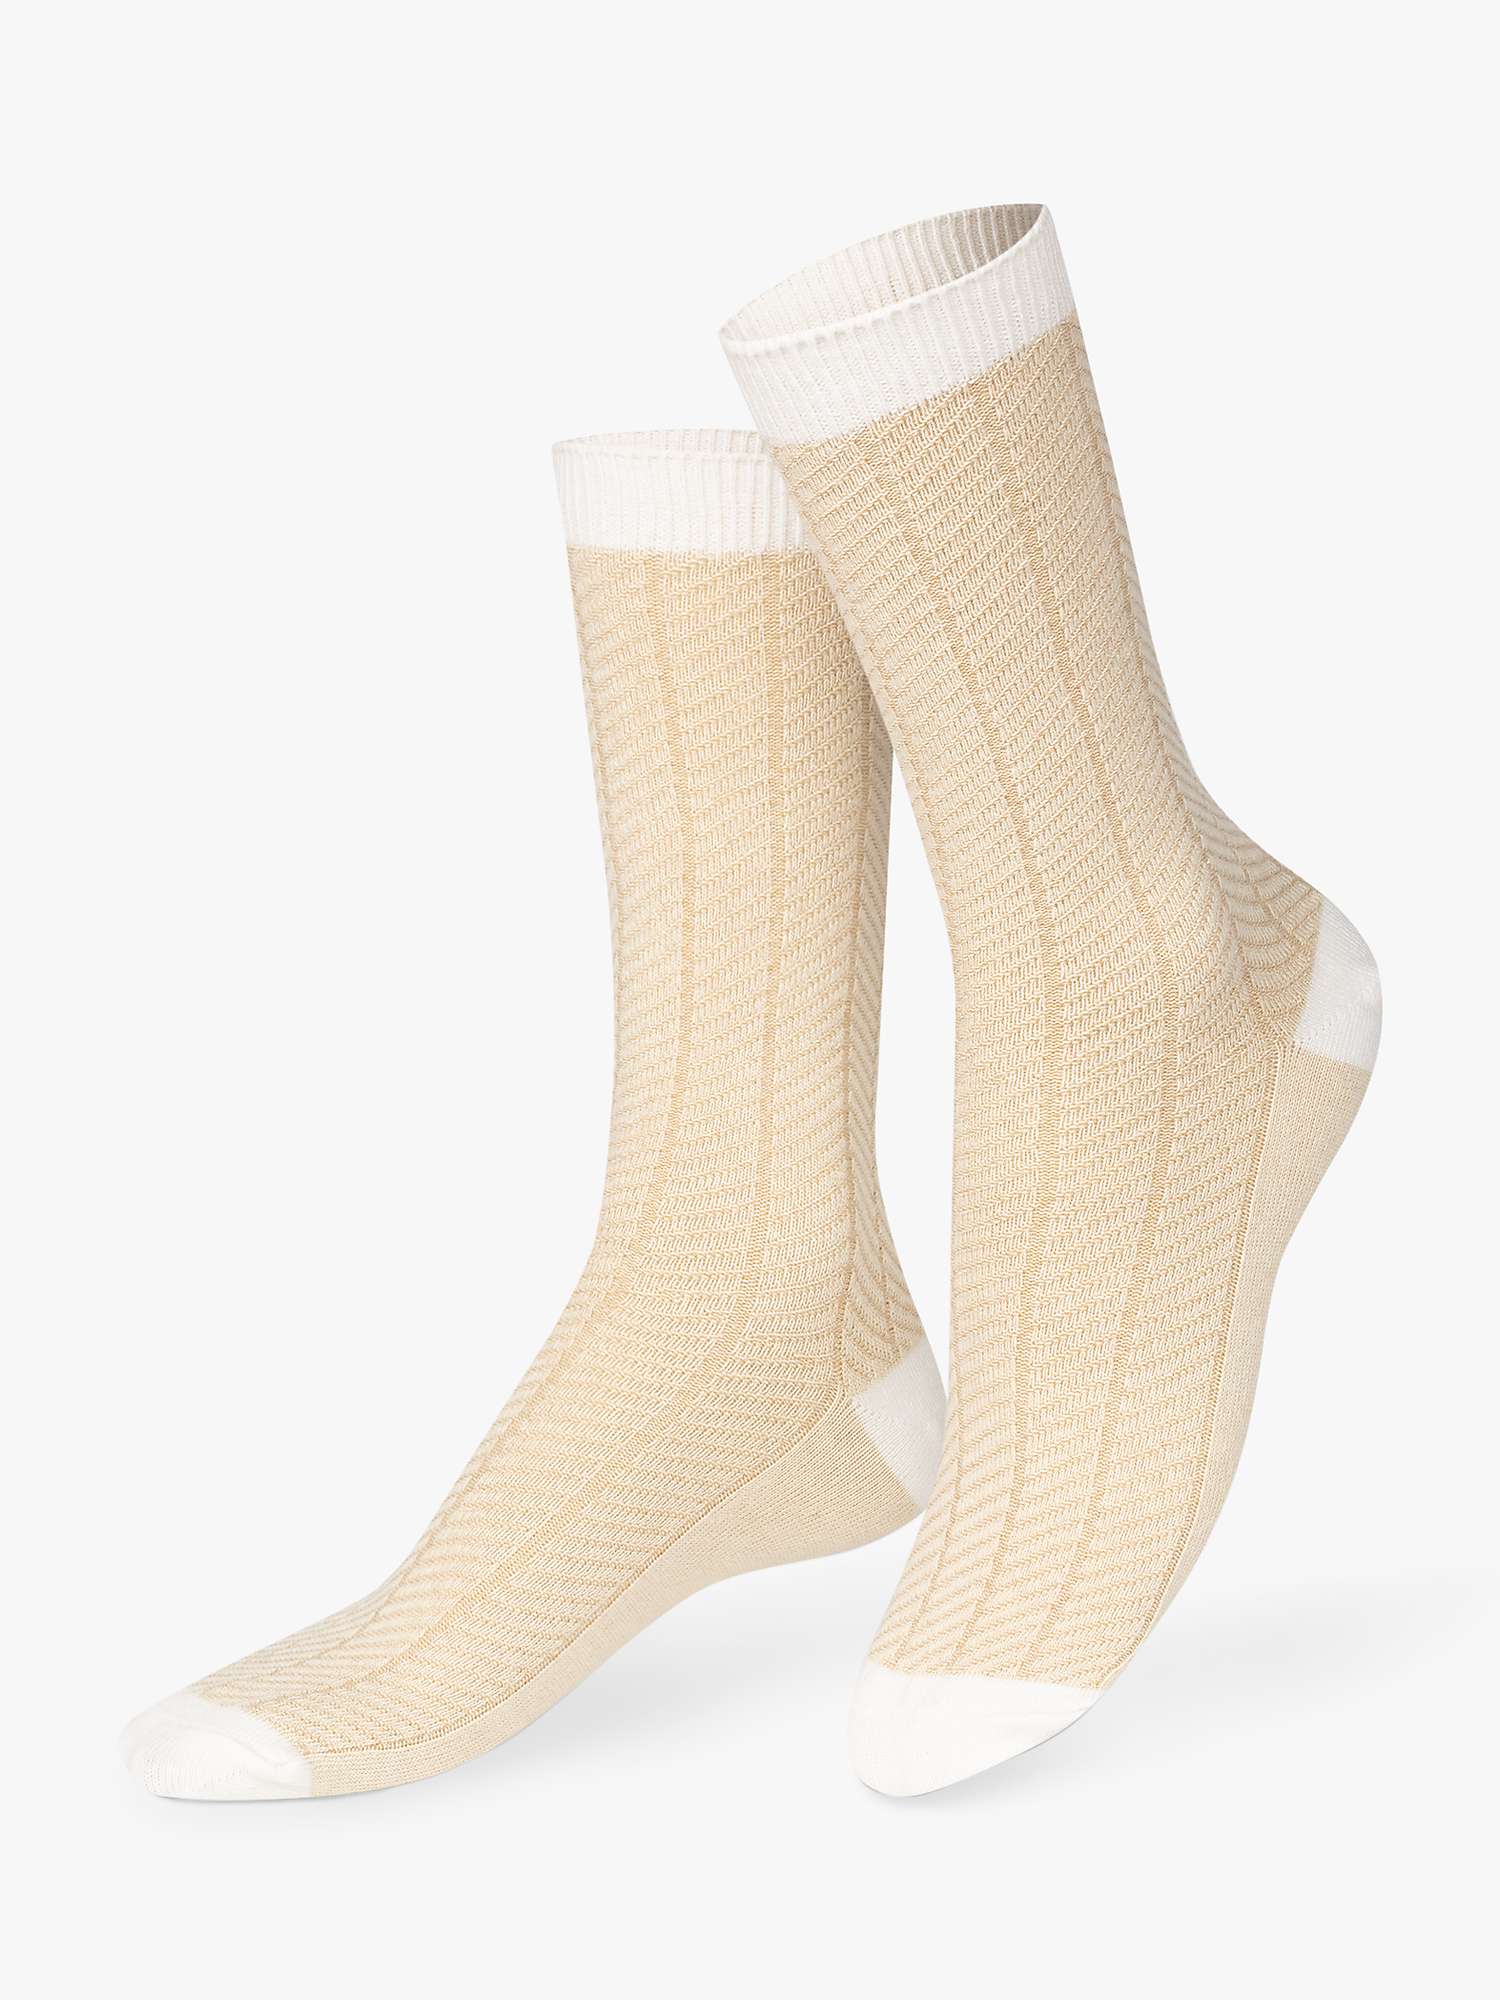 Buy EAT MY SOCKS Petit Camembert Socks, Multi. One Size Online at johnlewis.com